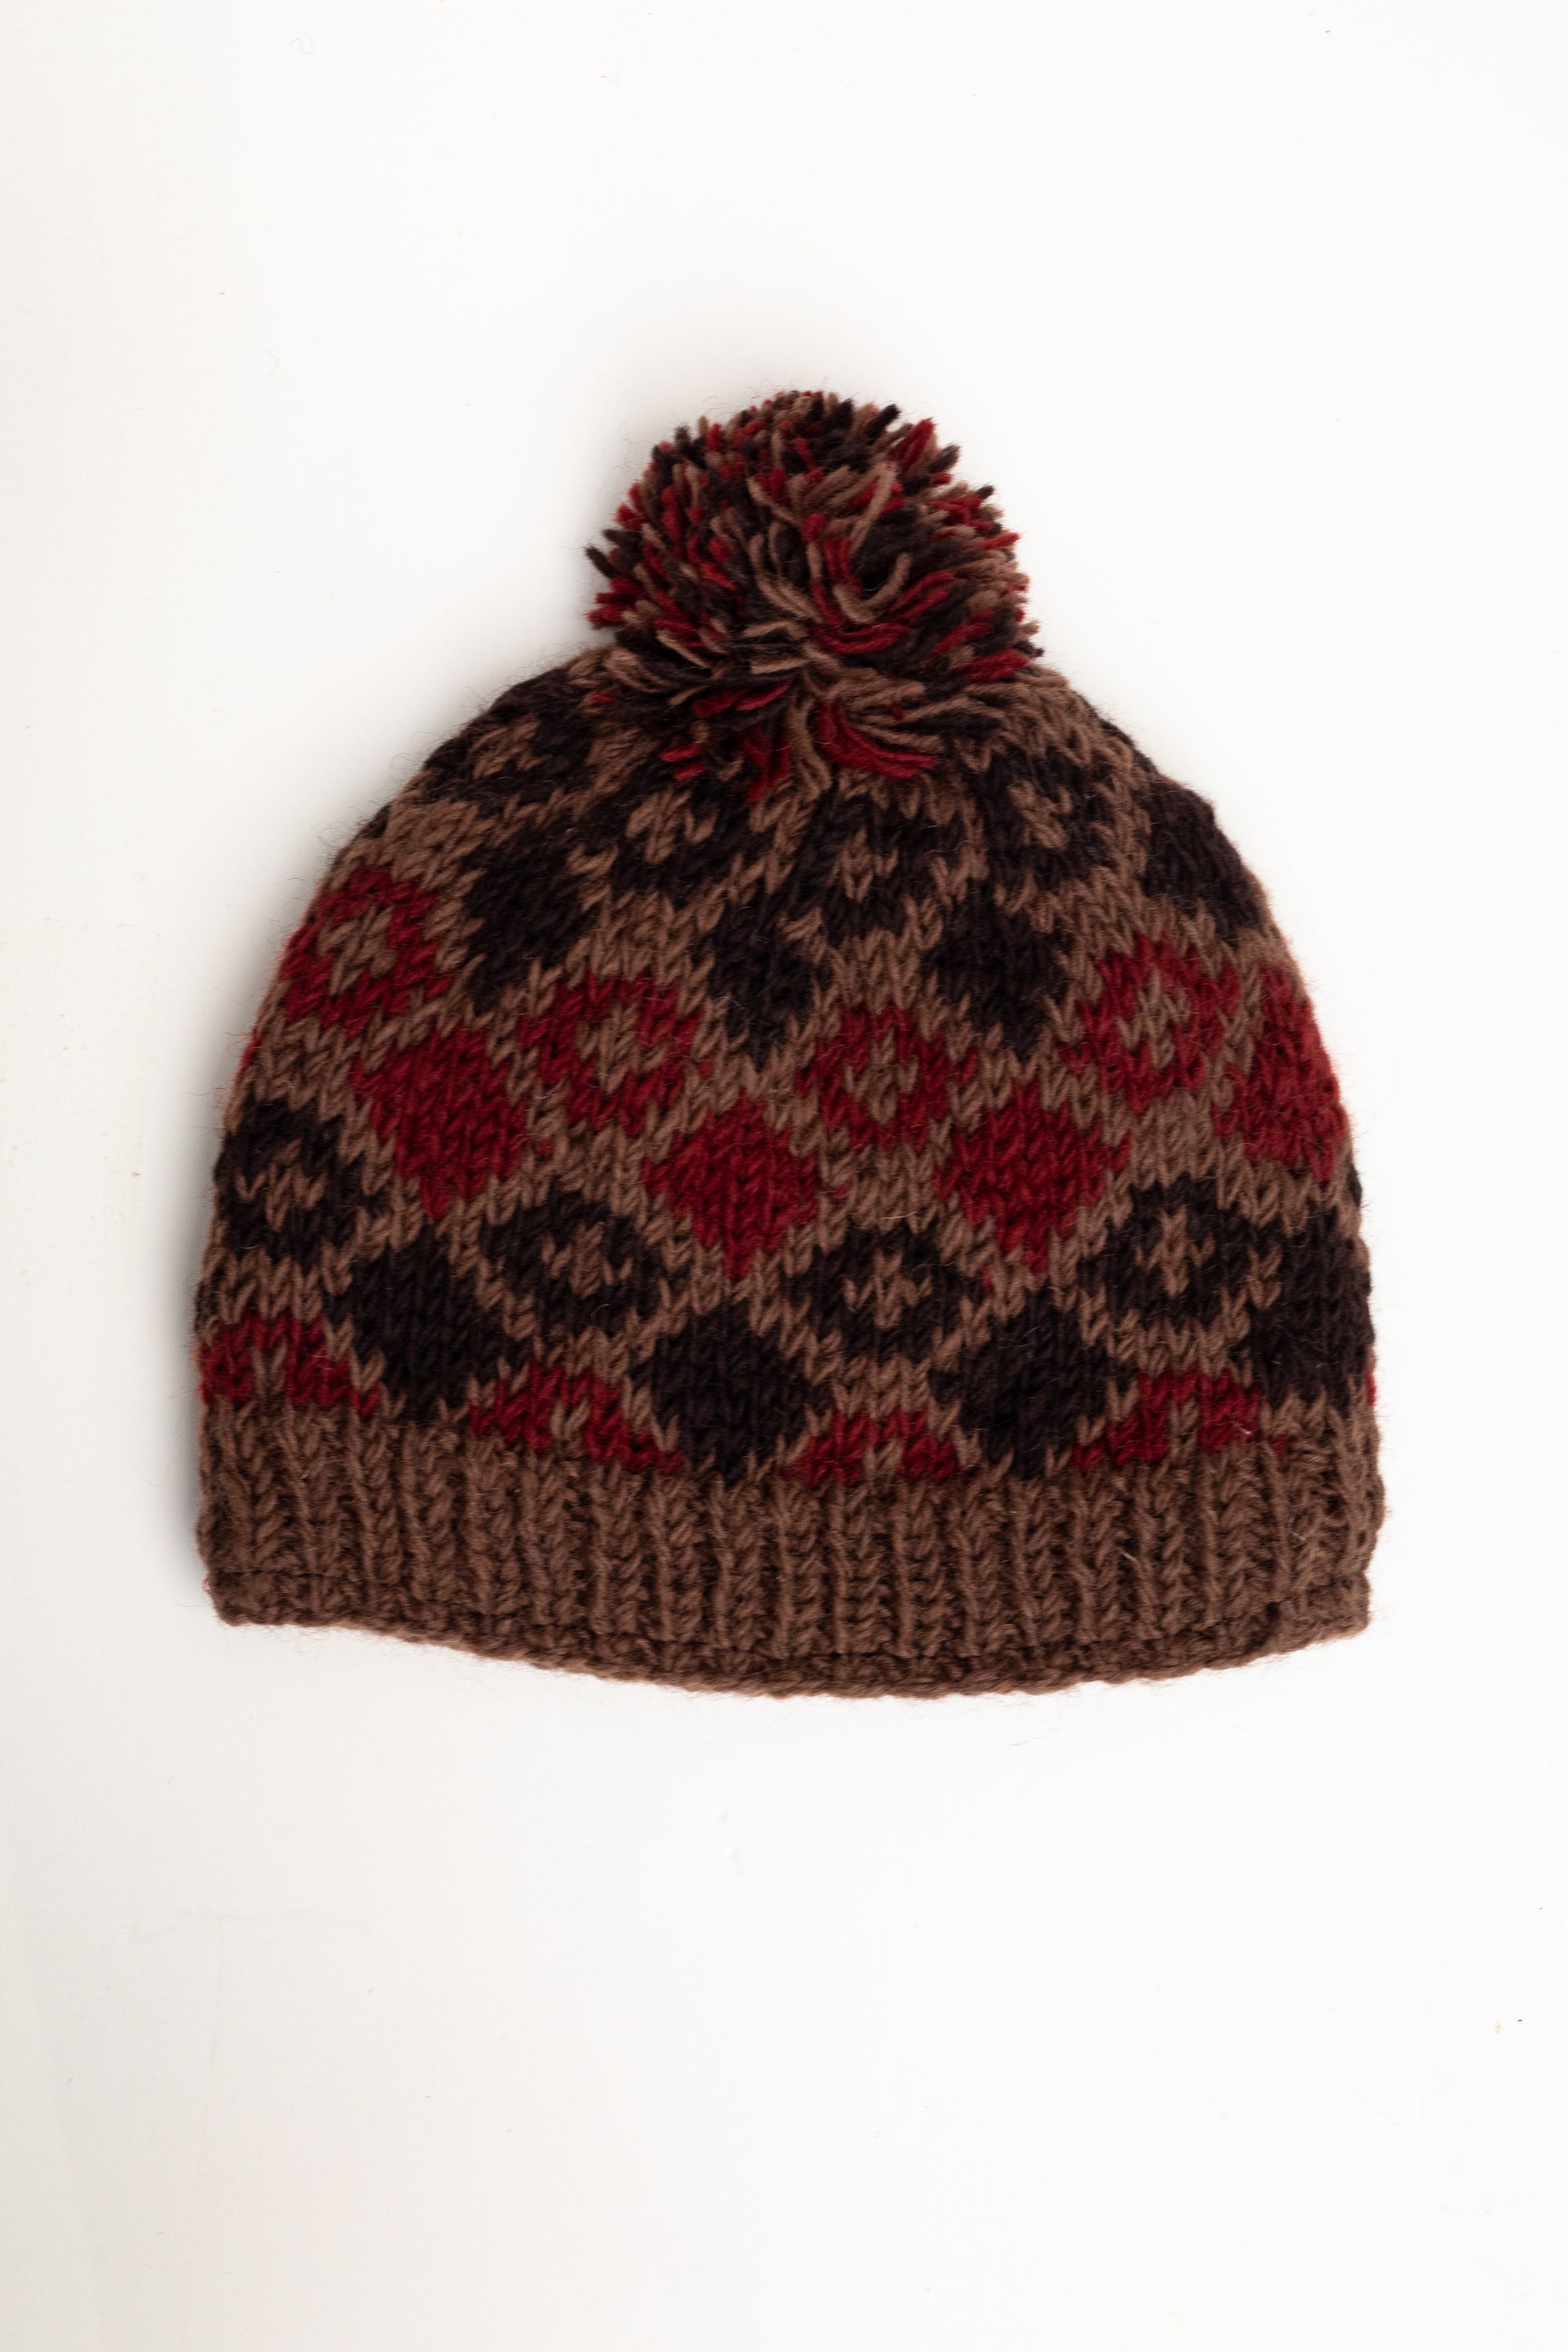 Wool & Fleece Hat with Pom - Diamond Design (Brown & Rust) - Made in Nepal